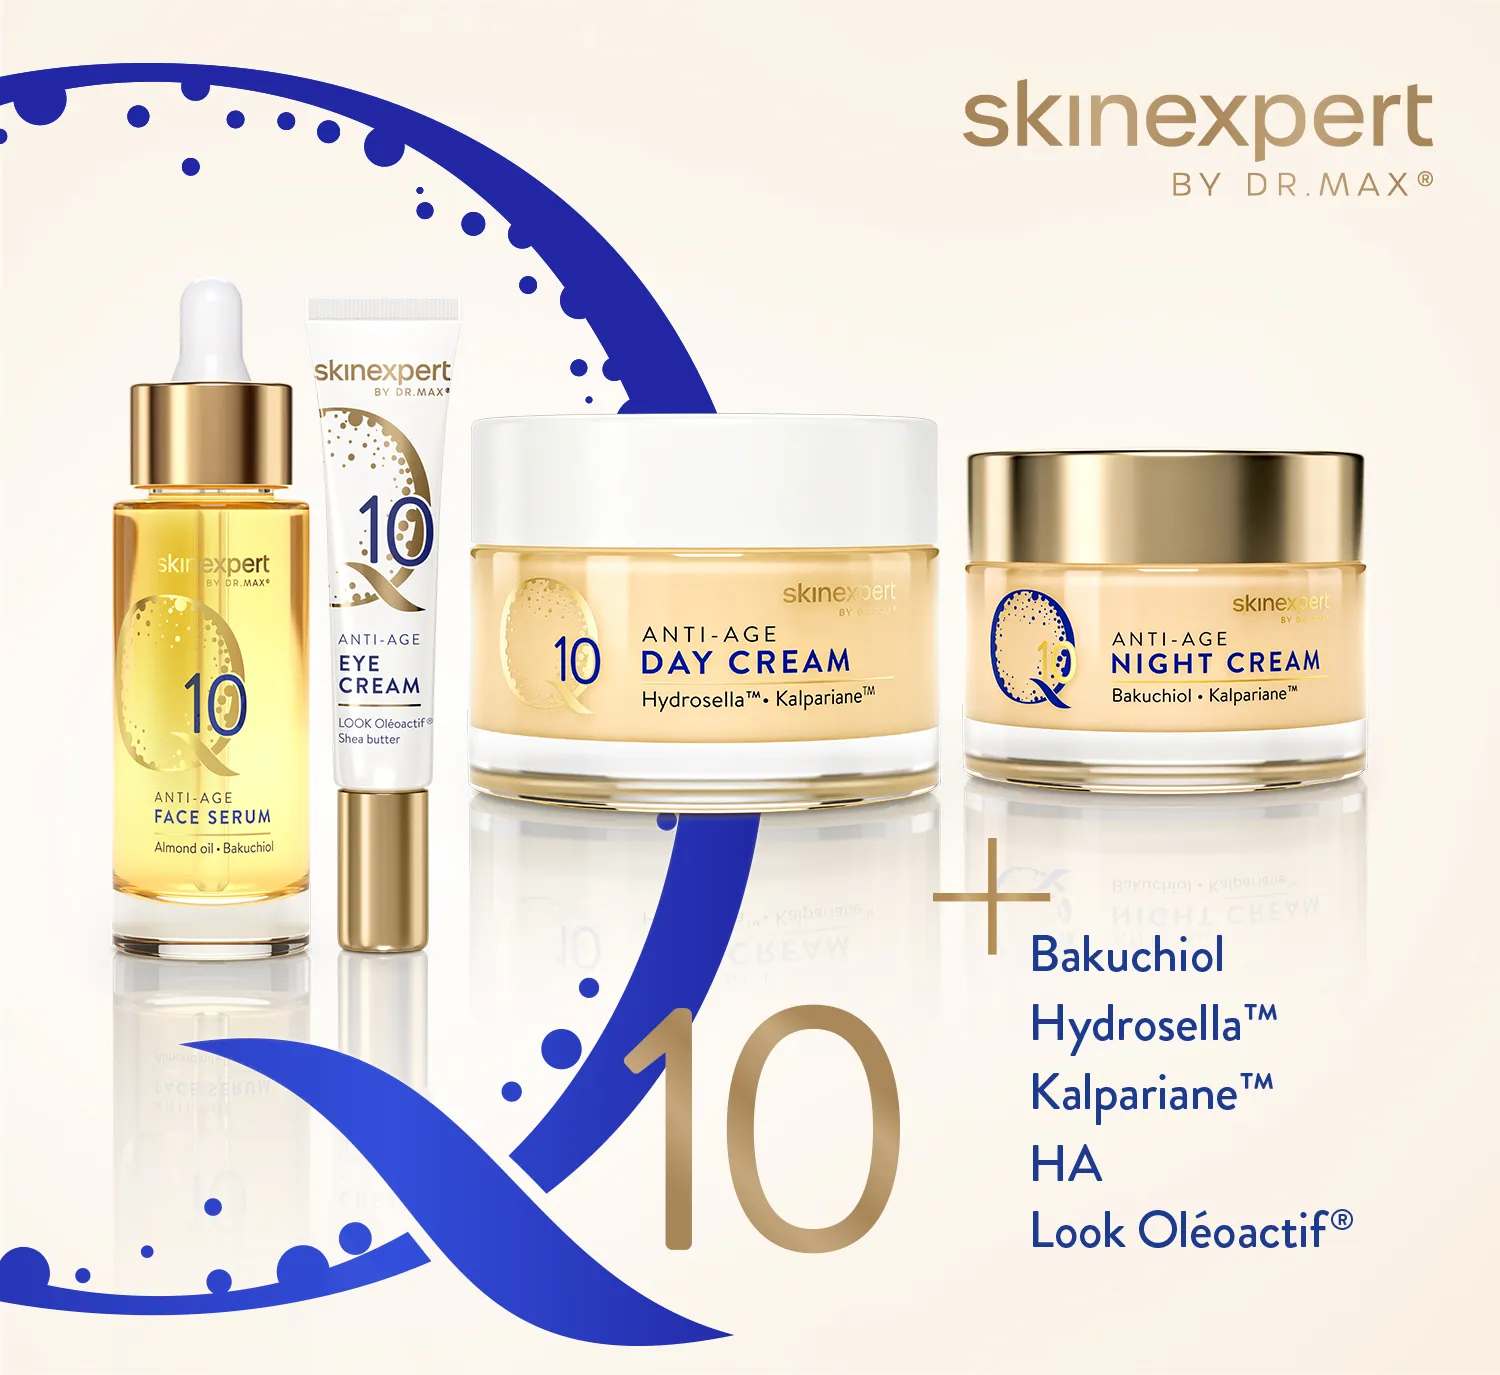 Skinexpert by Dr. Max Q10. Koenzym Q 10, Bakuchiol, Hydrosella TM, Kalpariane TM, + LOOK Oléoactif®